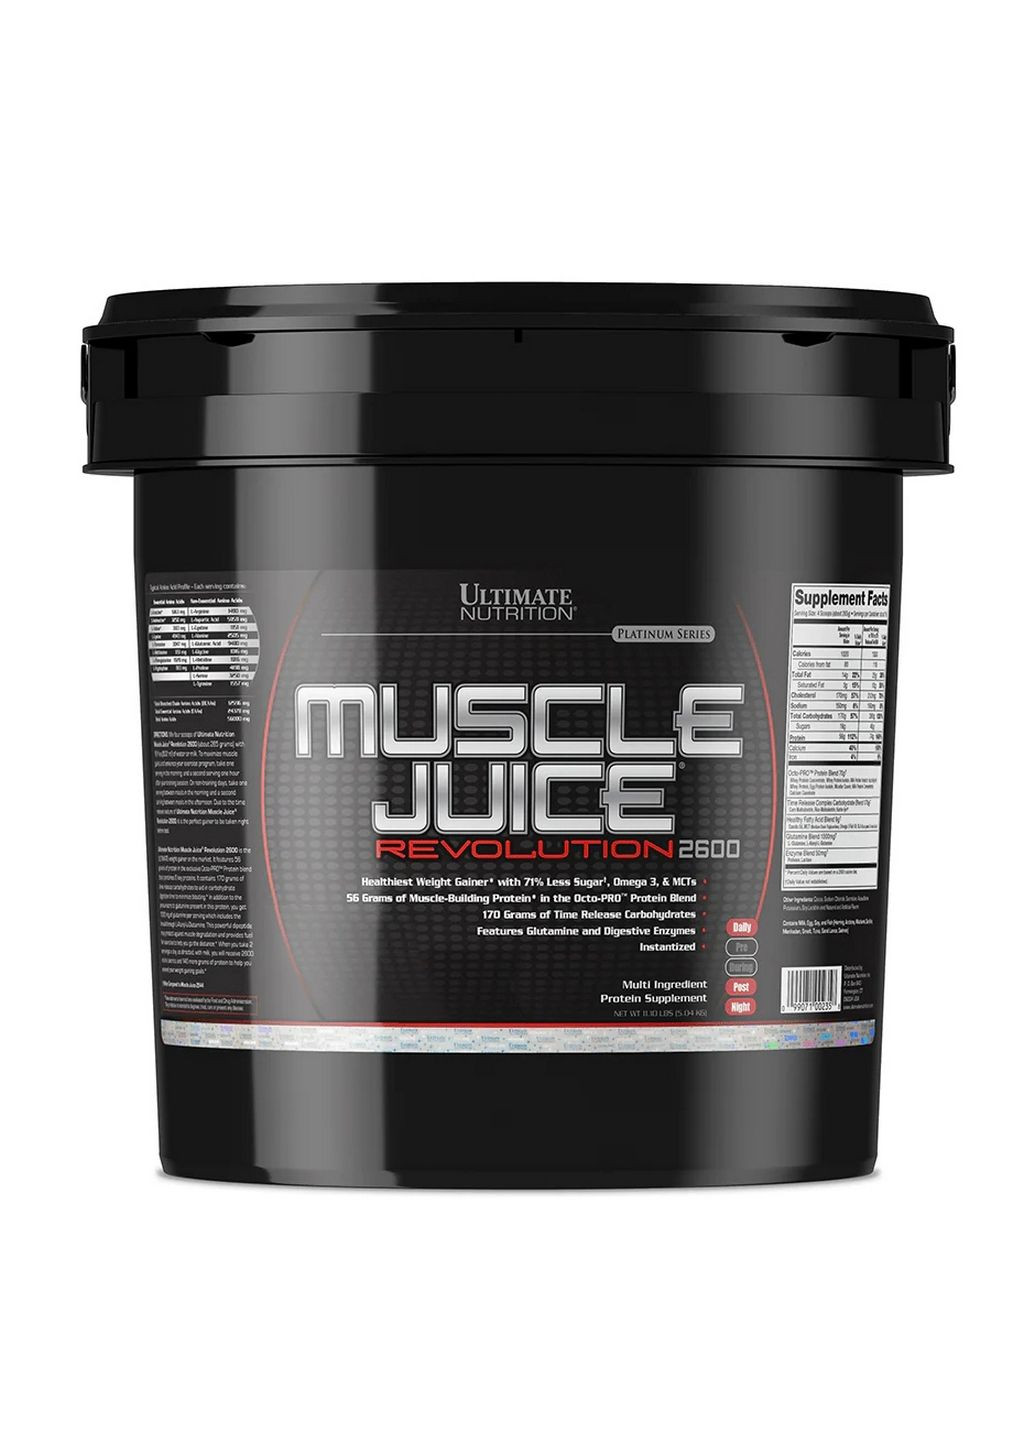 Гейнер Ultimate Muscle Juice Revolution 2600, 5 кг Печиво-крем Ultimate Nutrition (293477703)